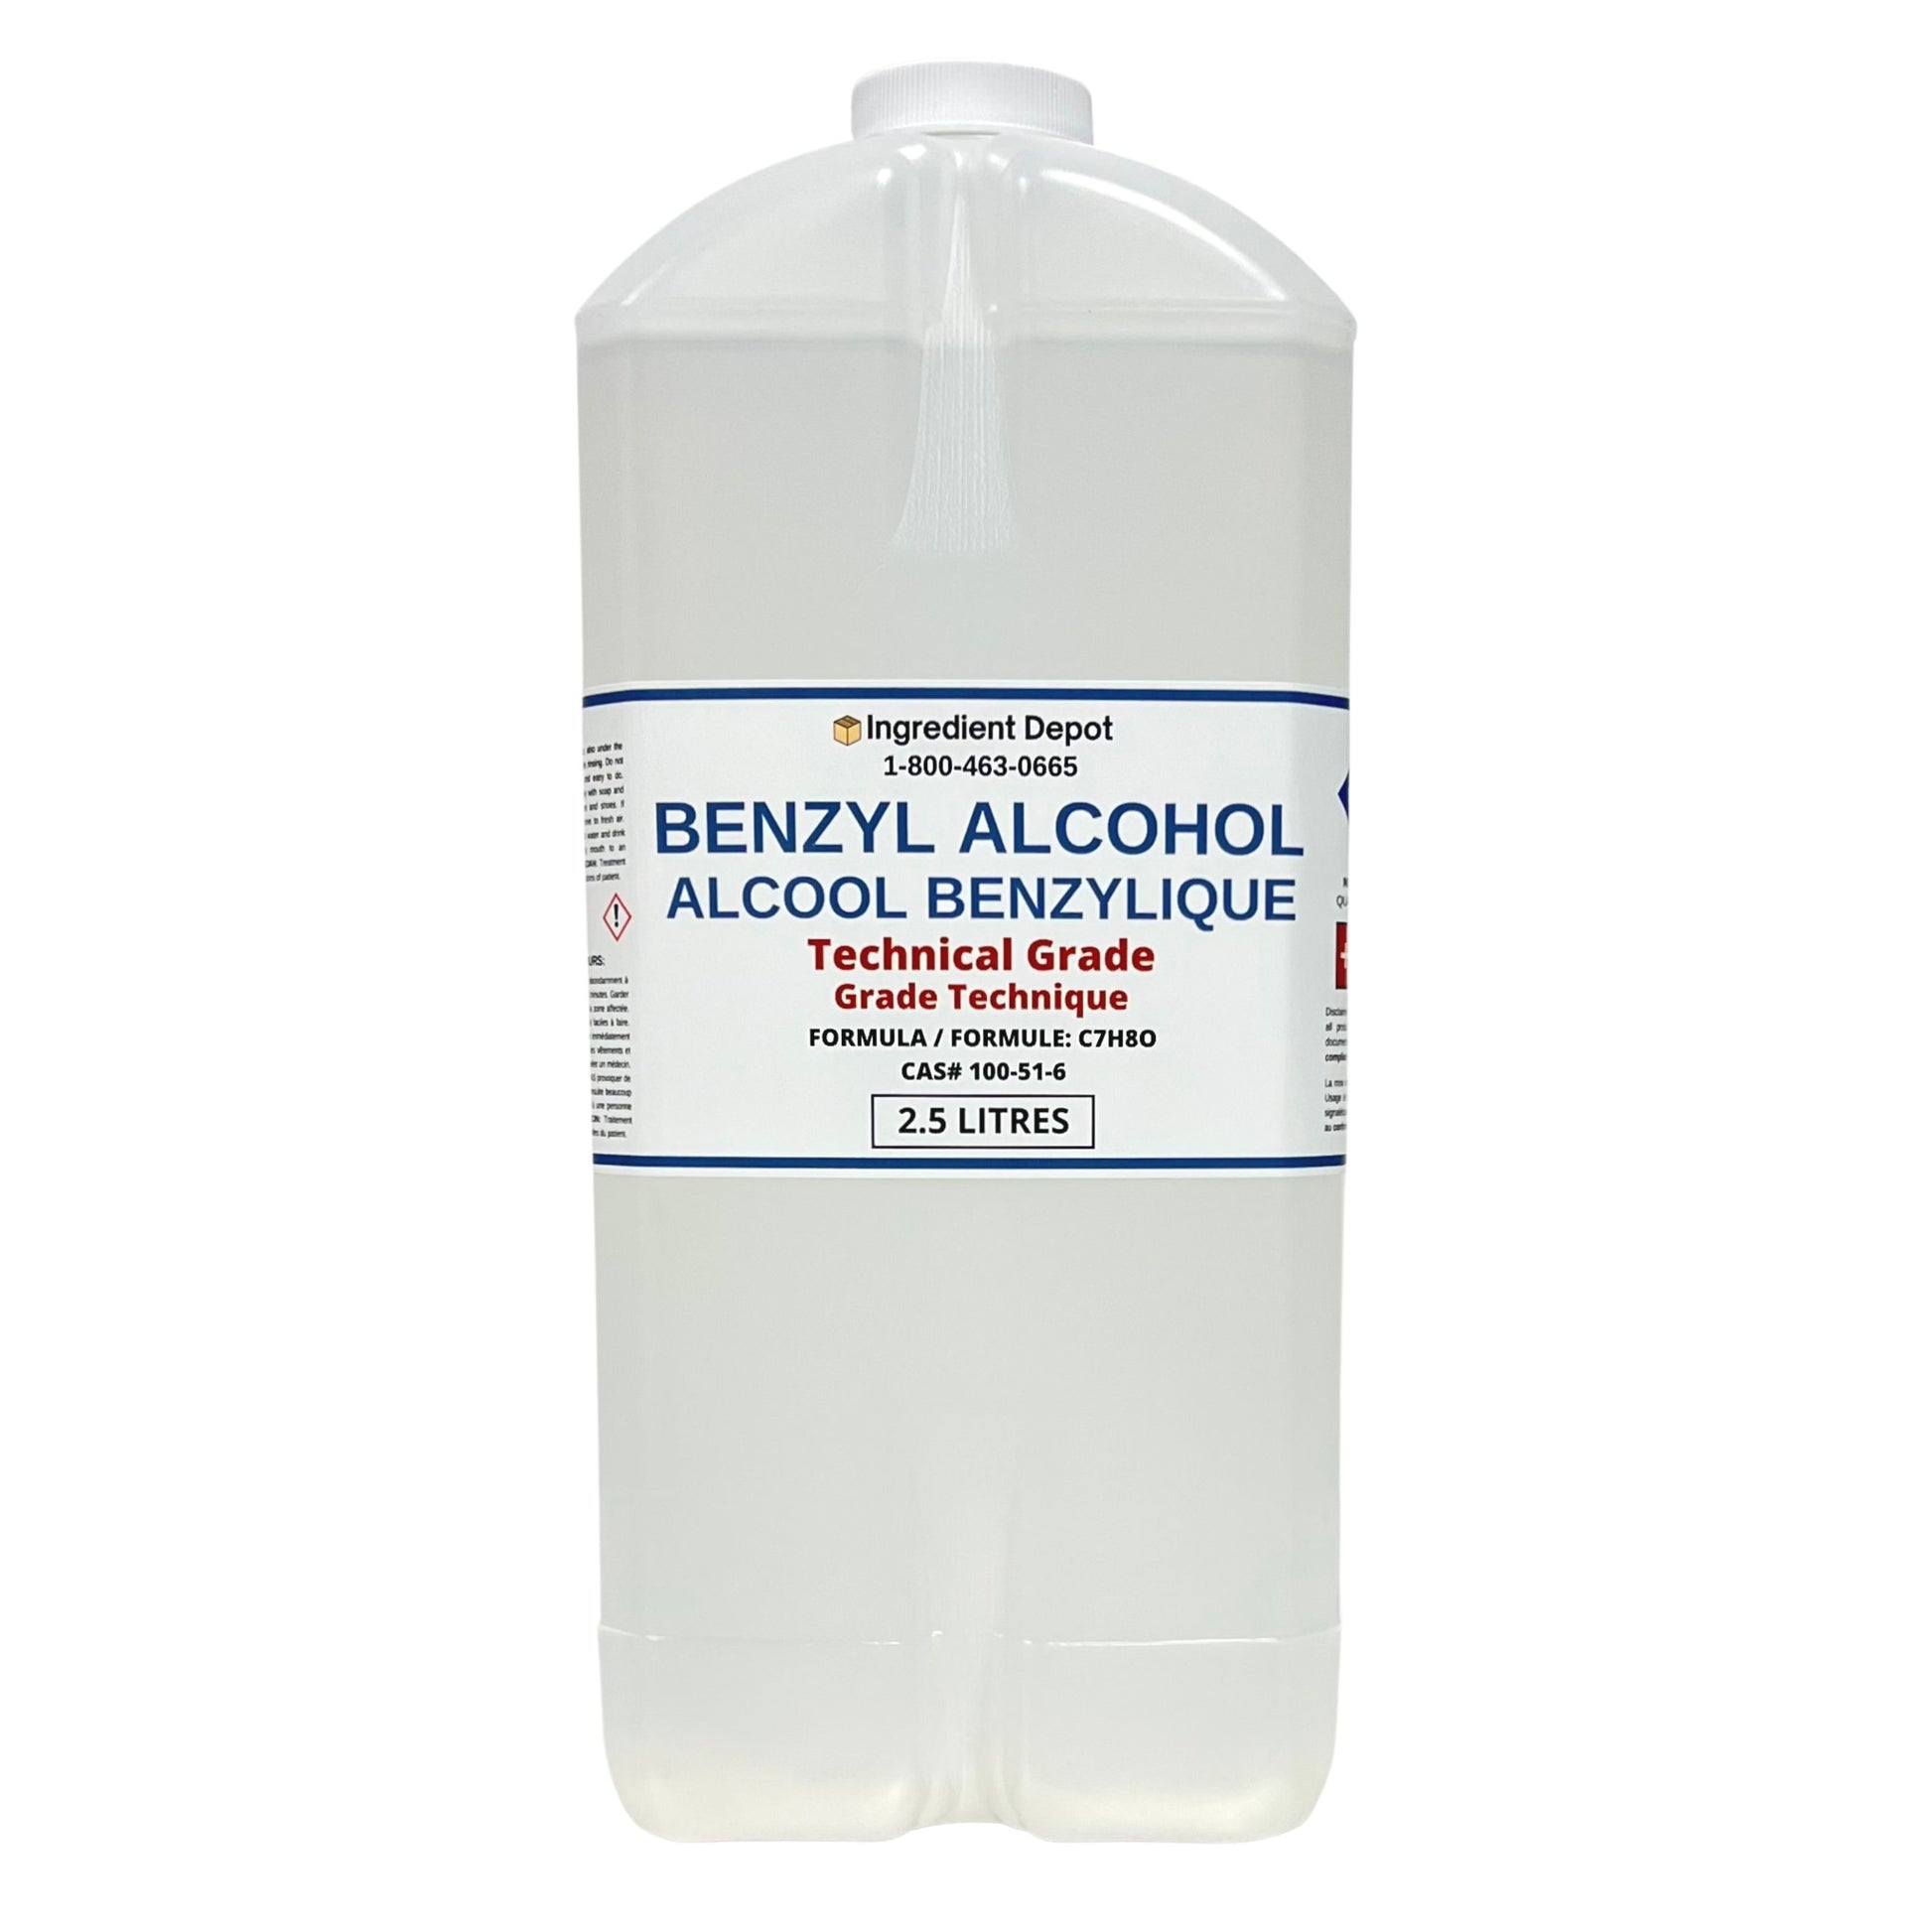 Benzyl Alcohol Technical Grade 2.5 litres - IngredientDepot.com